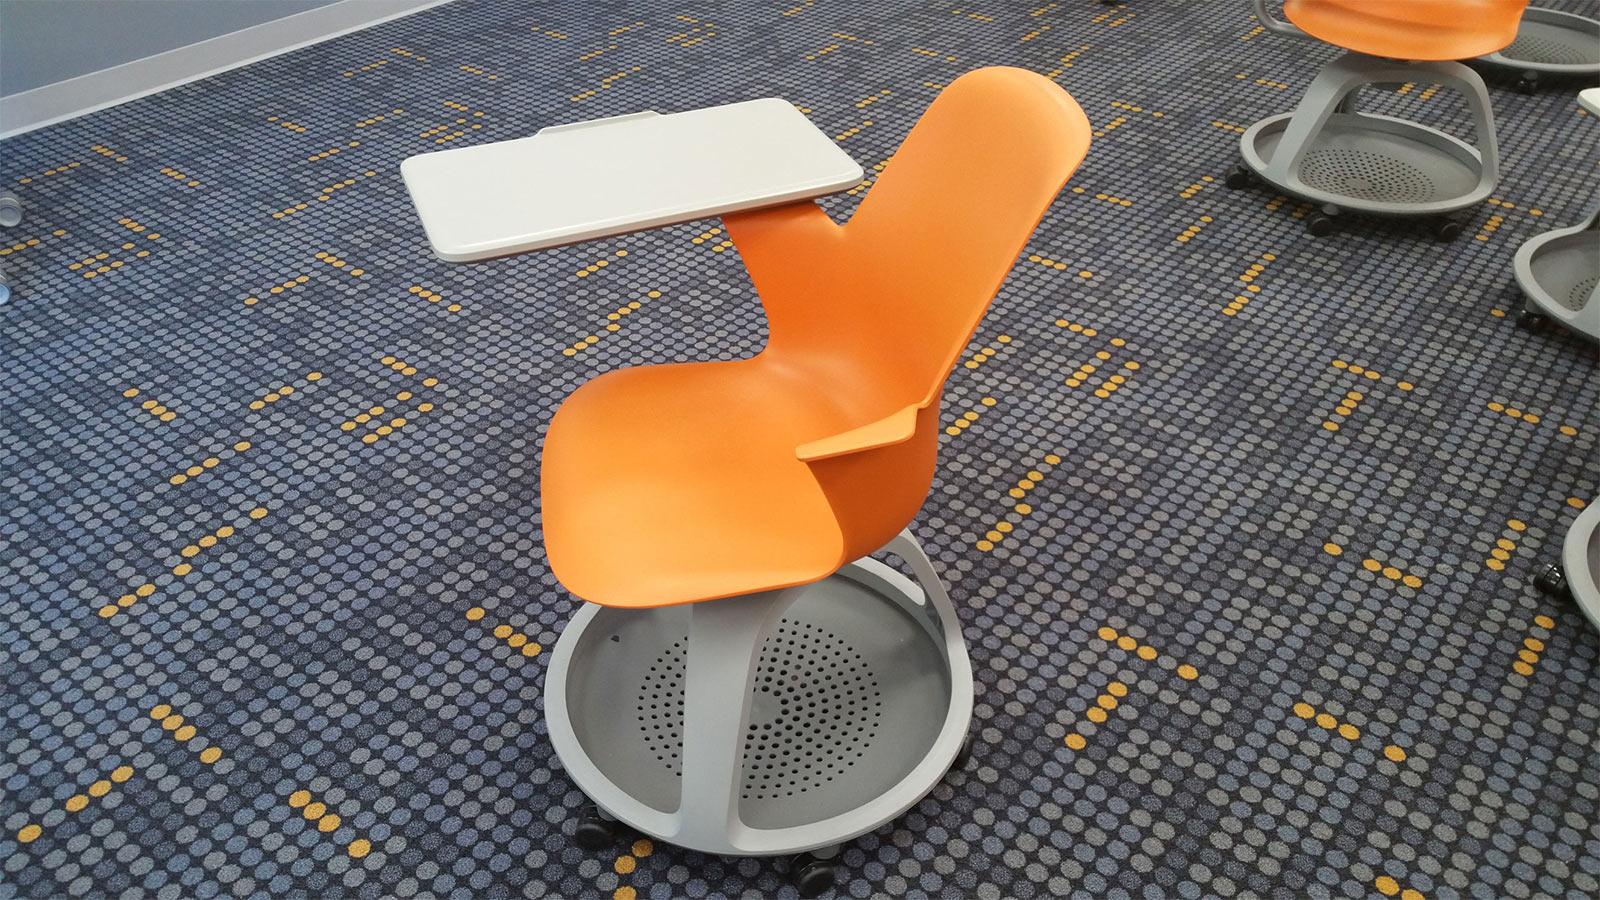 Orange smart chair